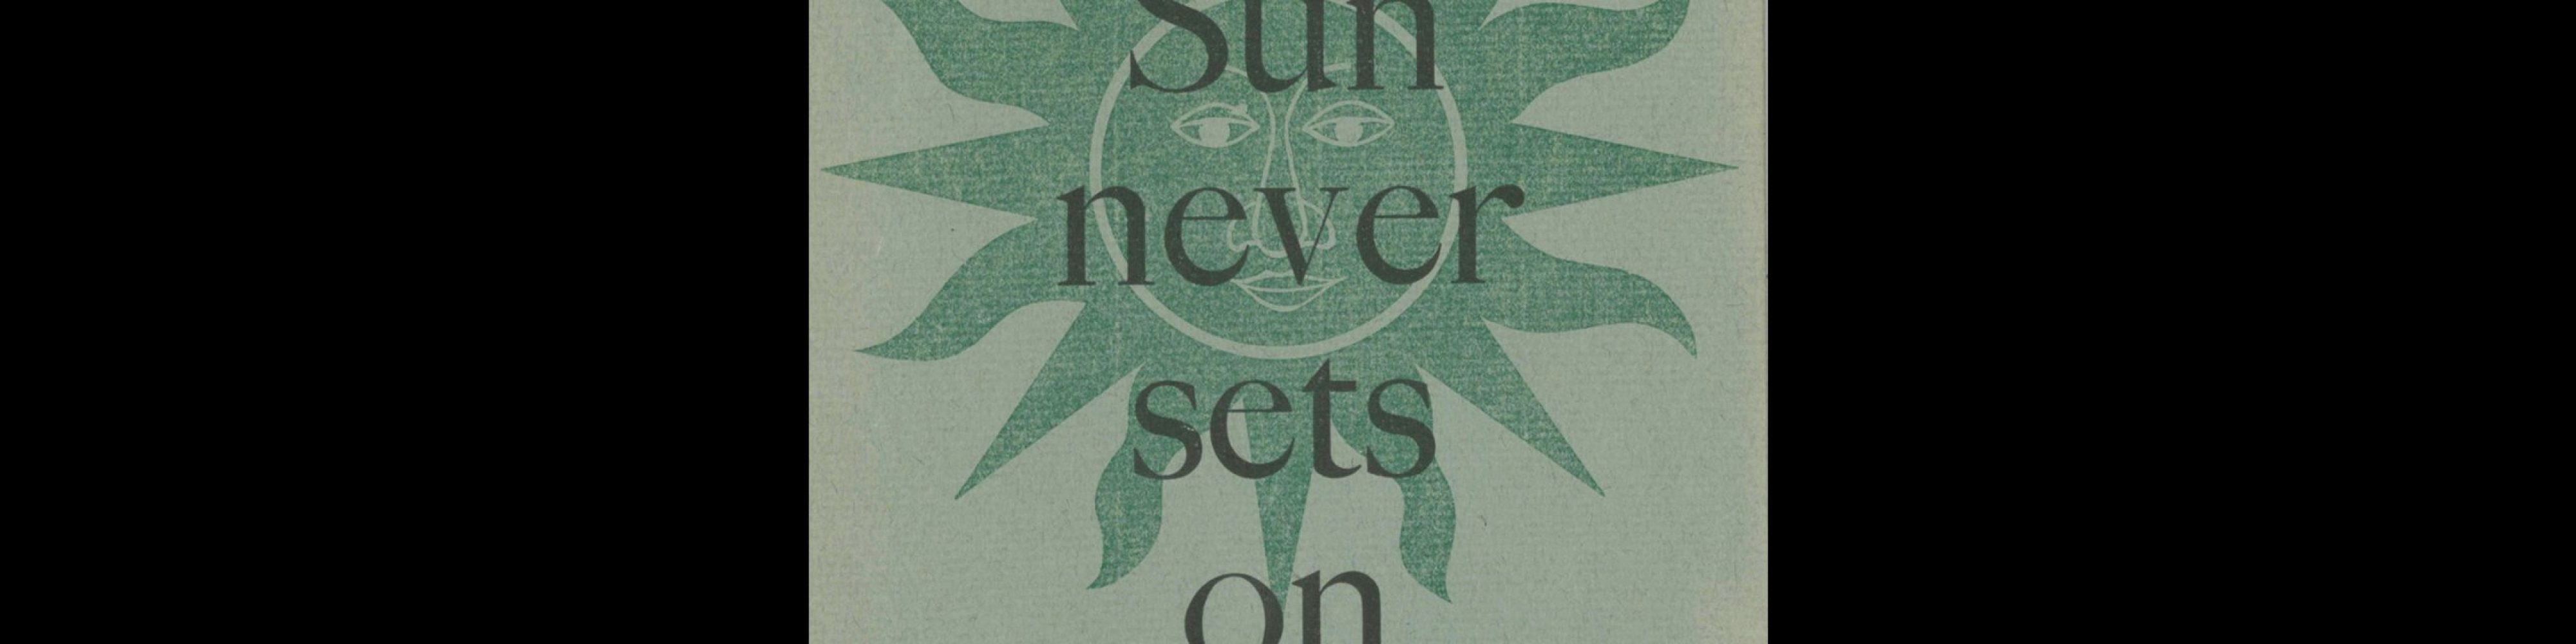 The Sun Never Sets on Caslon, Stephenson Blake, 1960s.jpg